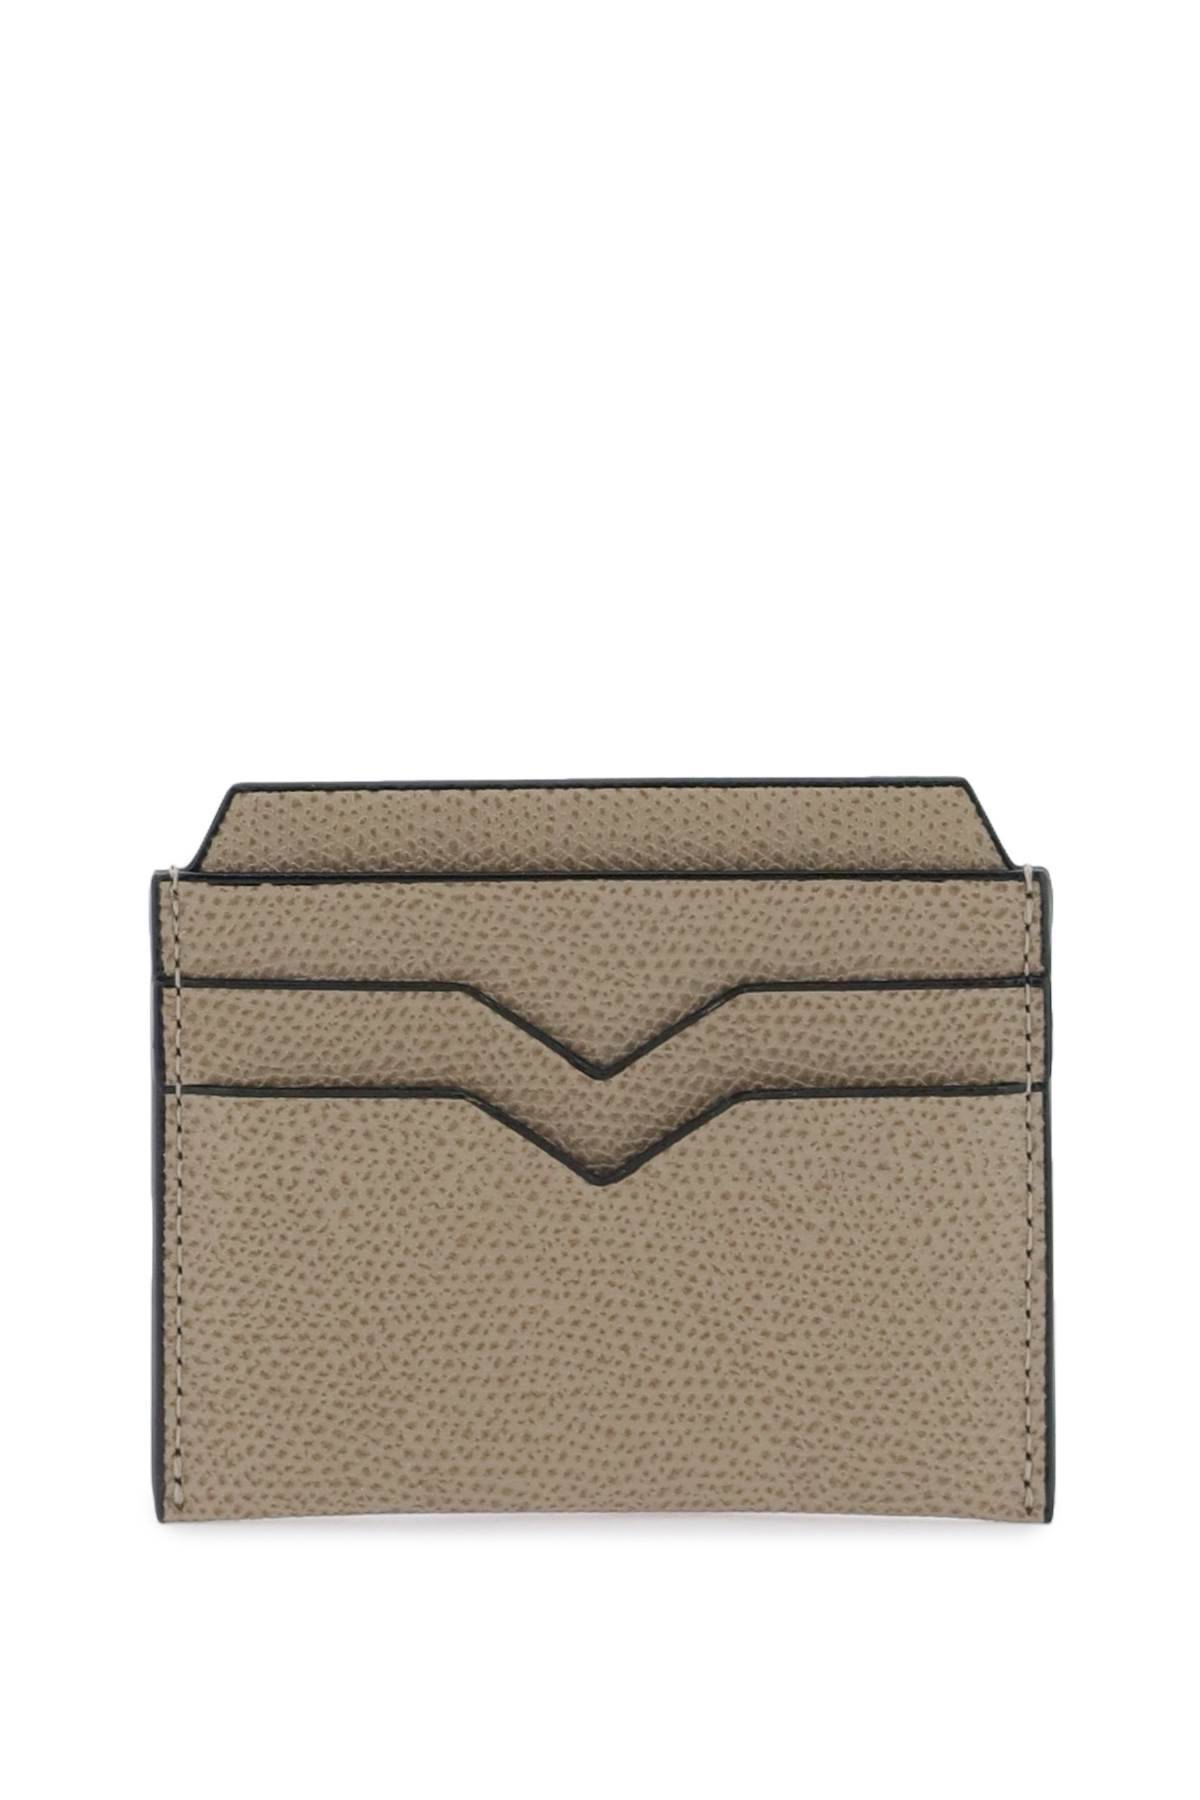 VALEXTRA leather cardholder